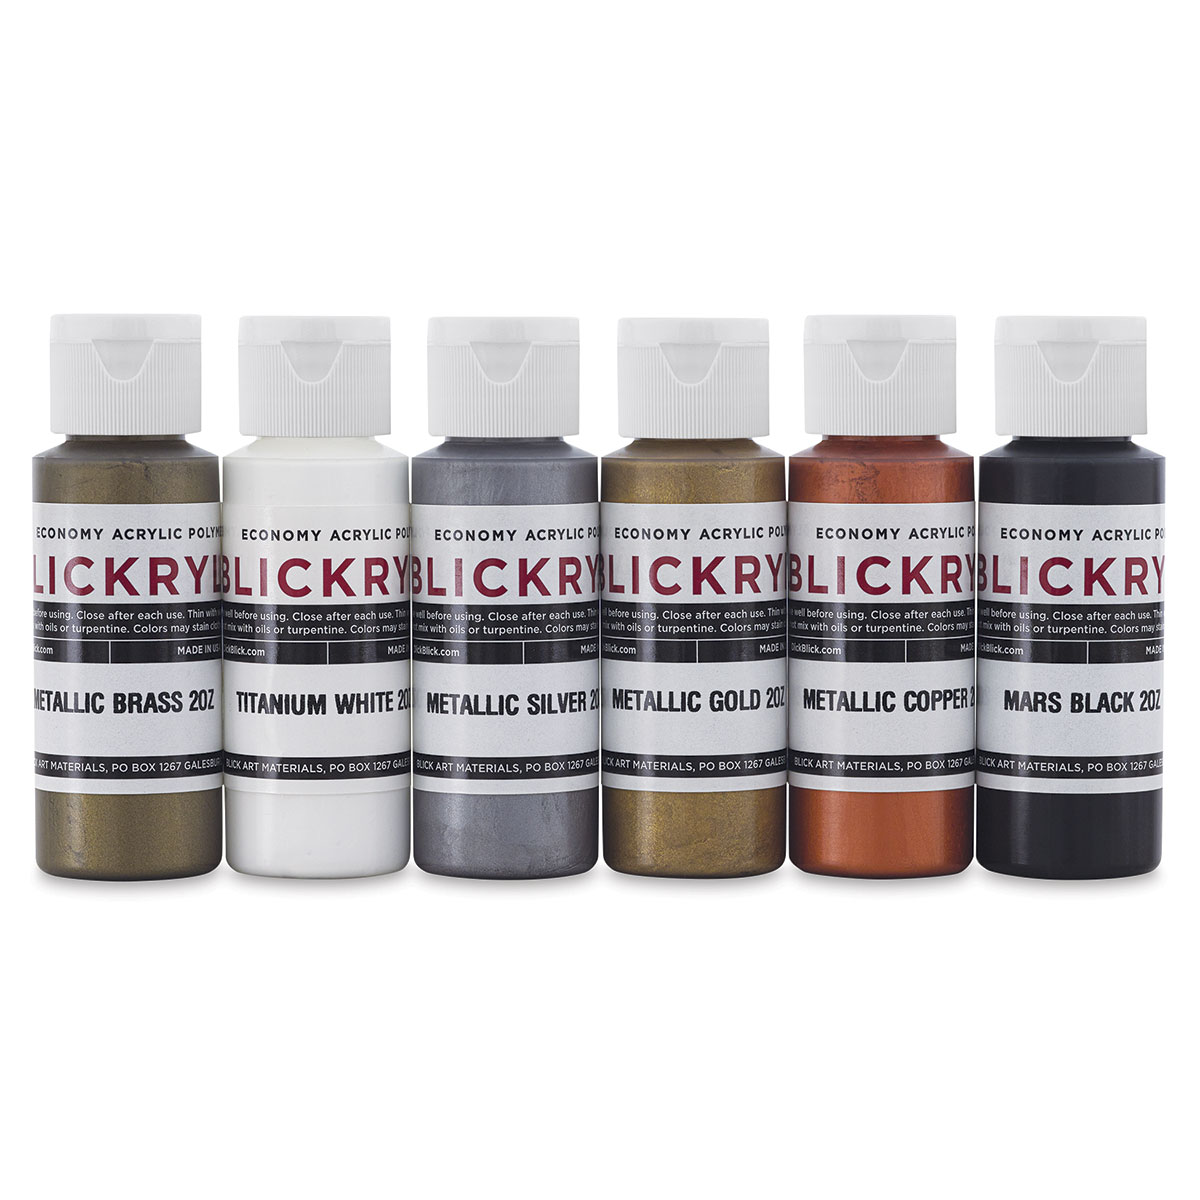 Blickrylic Student Acrylics - Metallic Colors, Set of 6, 2 oz Bottles